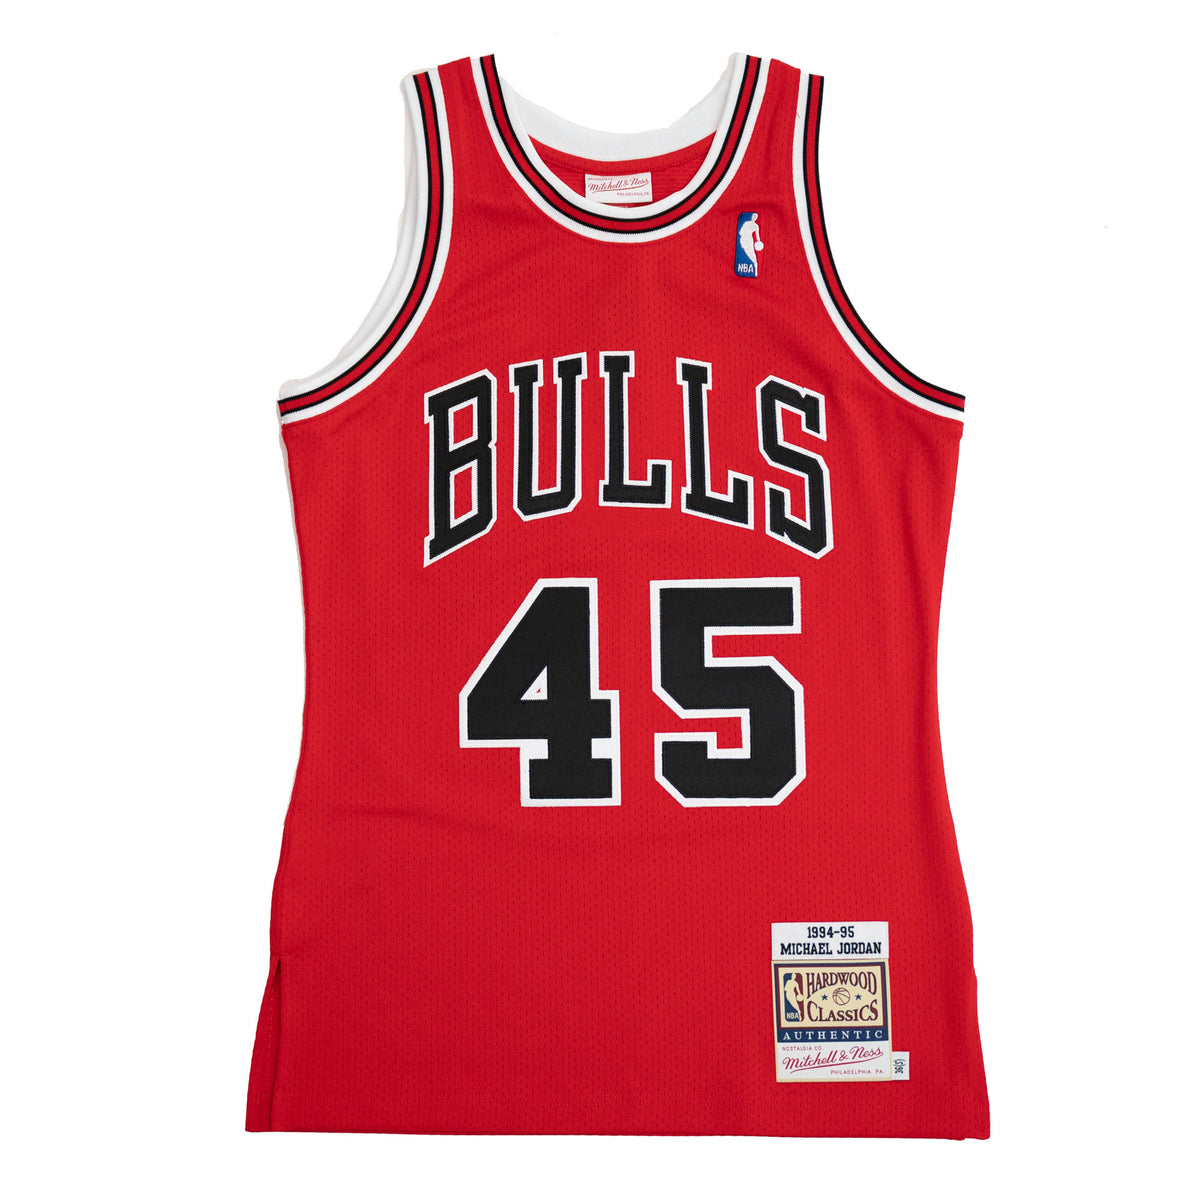 Jordan Rookie 8403 Authentic Nike Bulls Road Jersey (front)